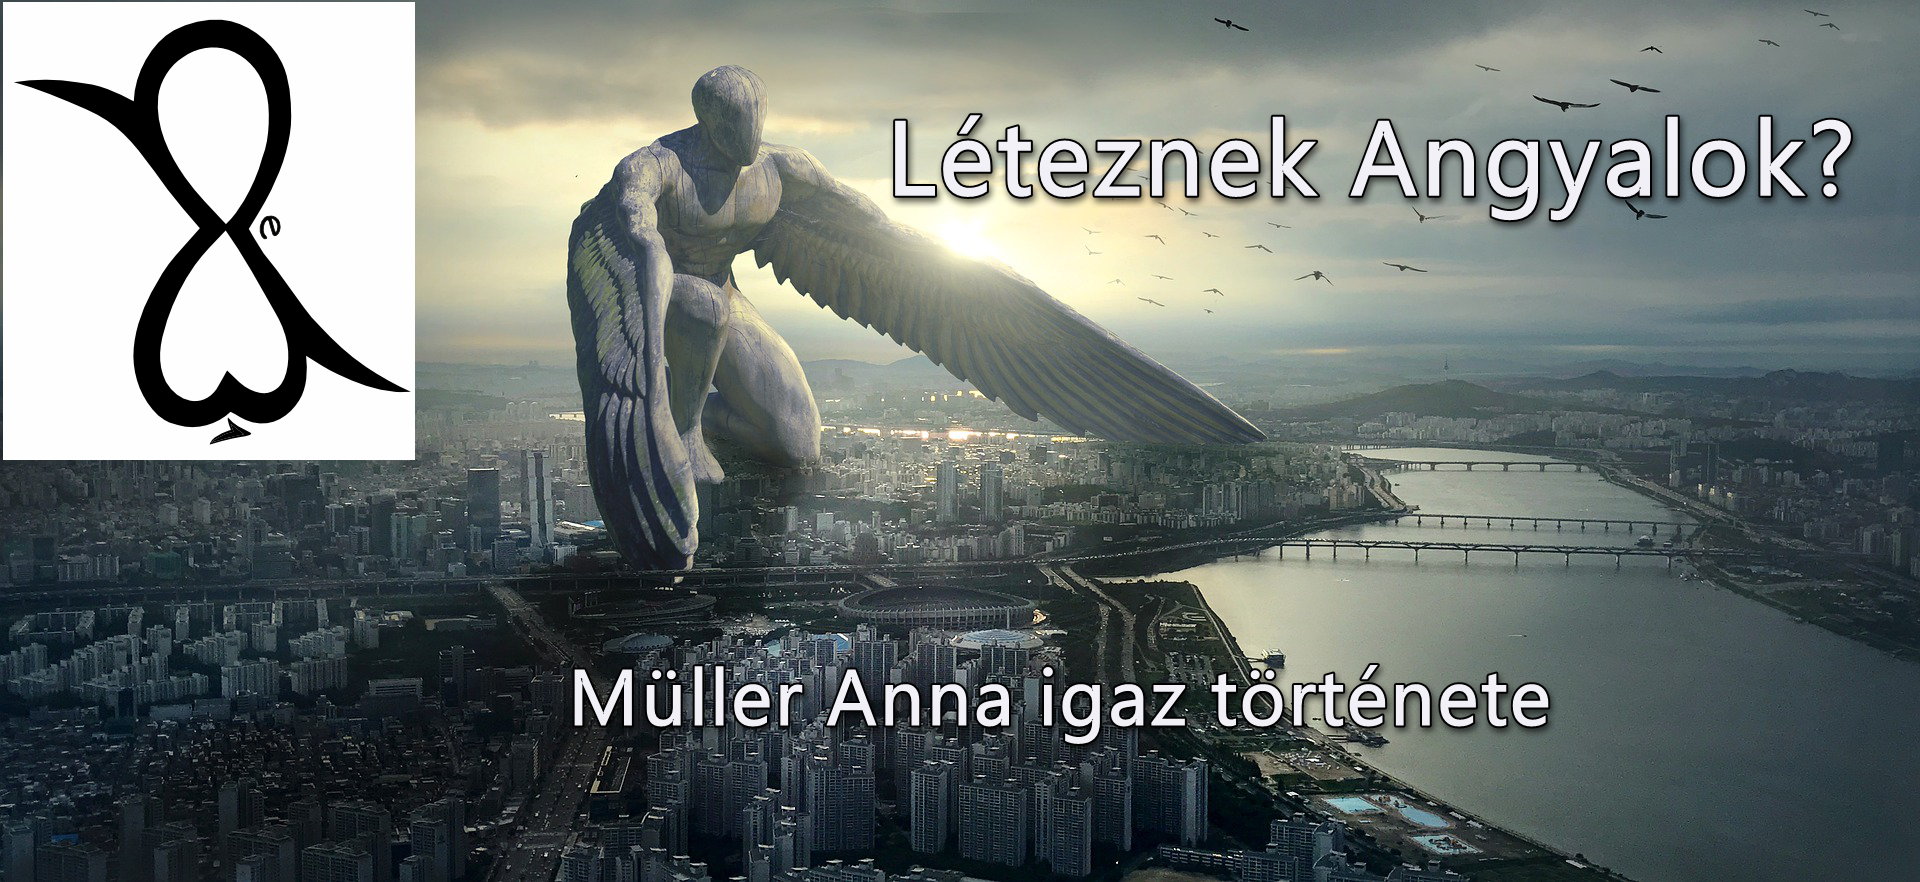 You are currently viewing Léteznek Angyalok? (Müller Anna igaz története)